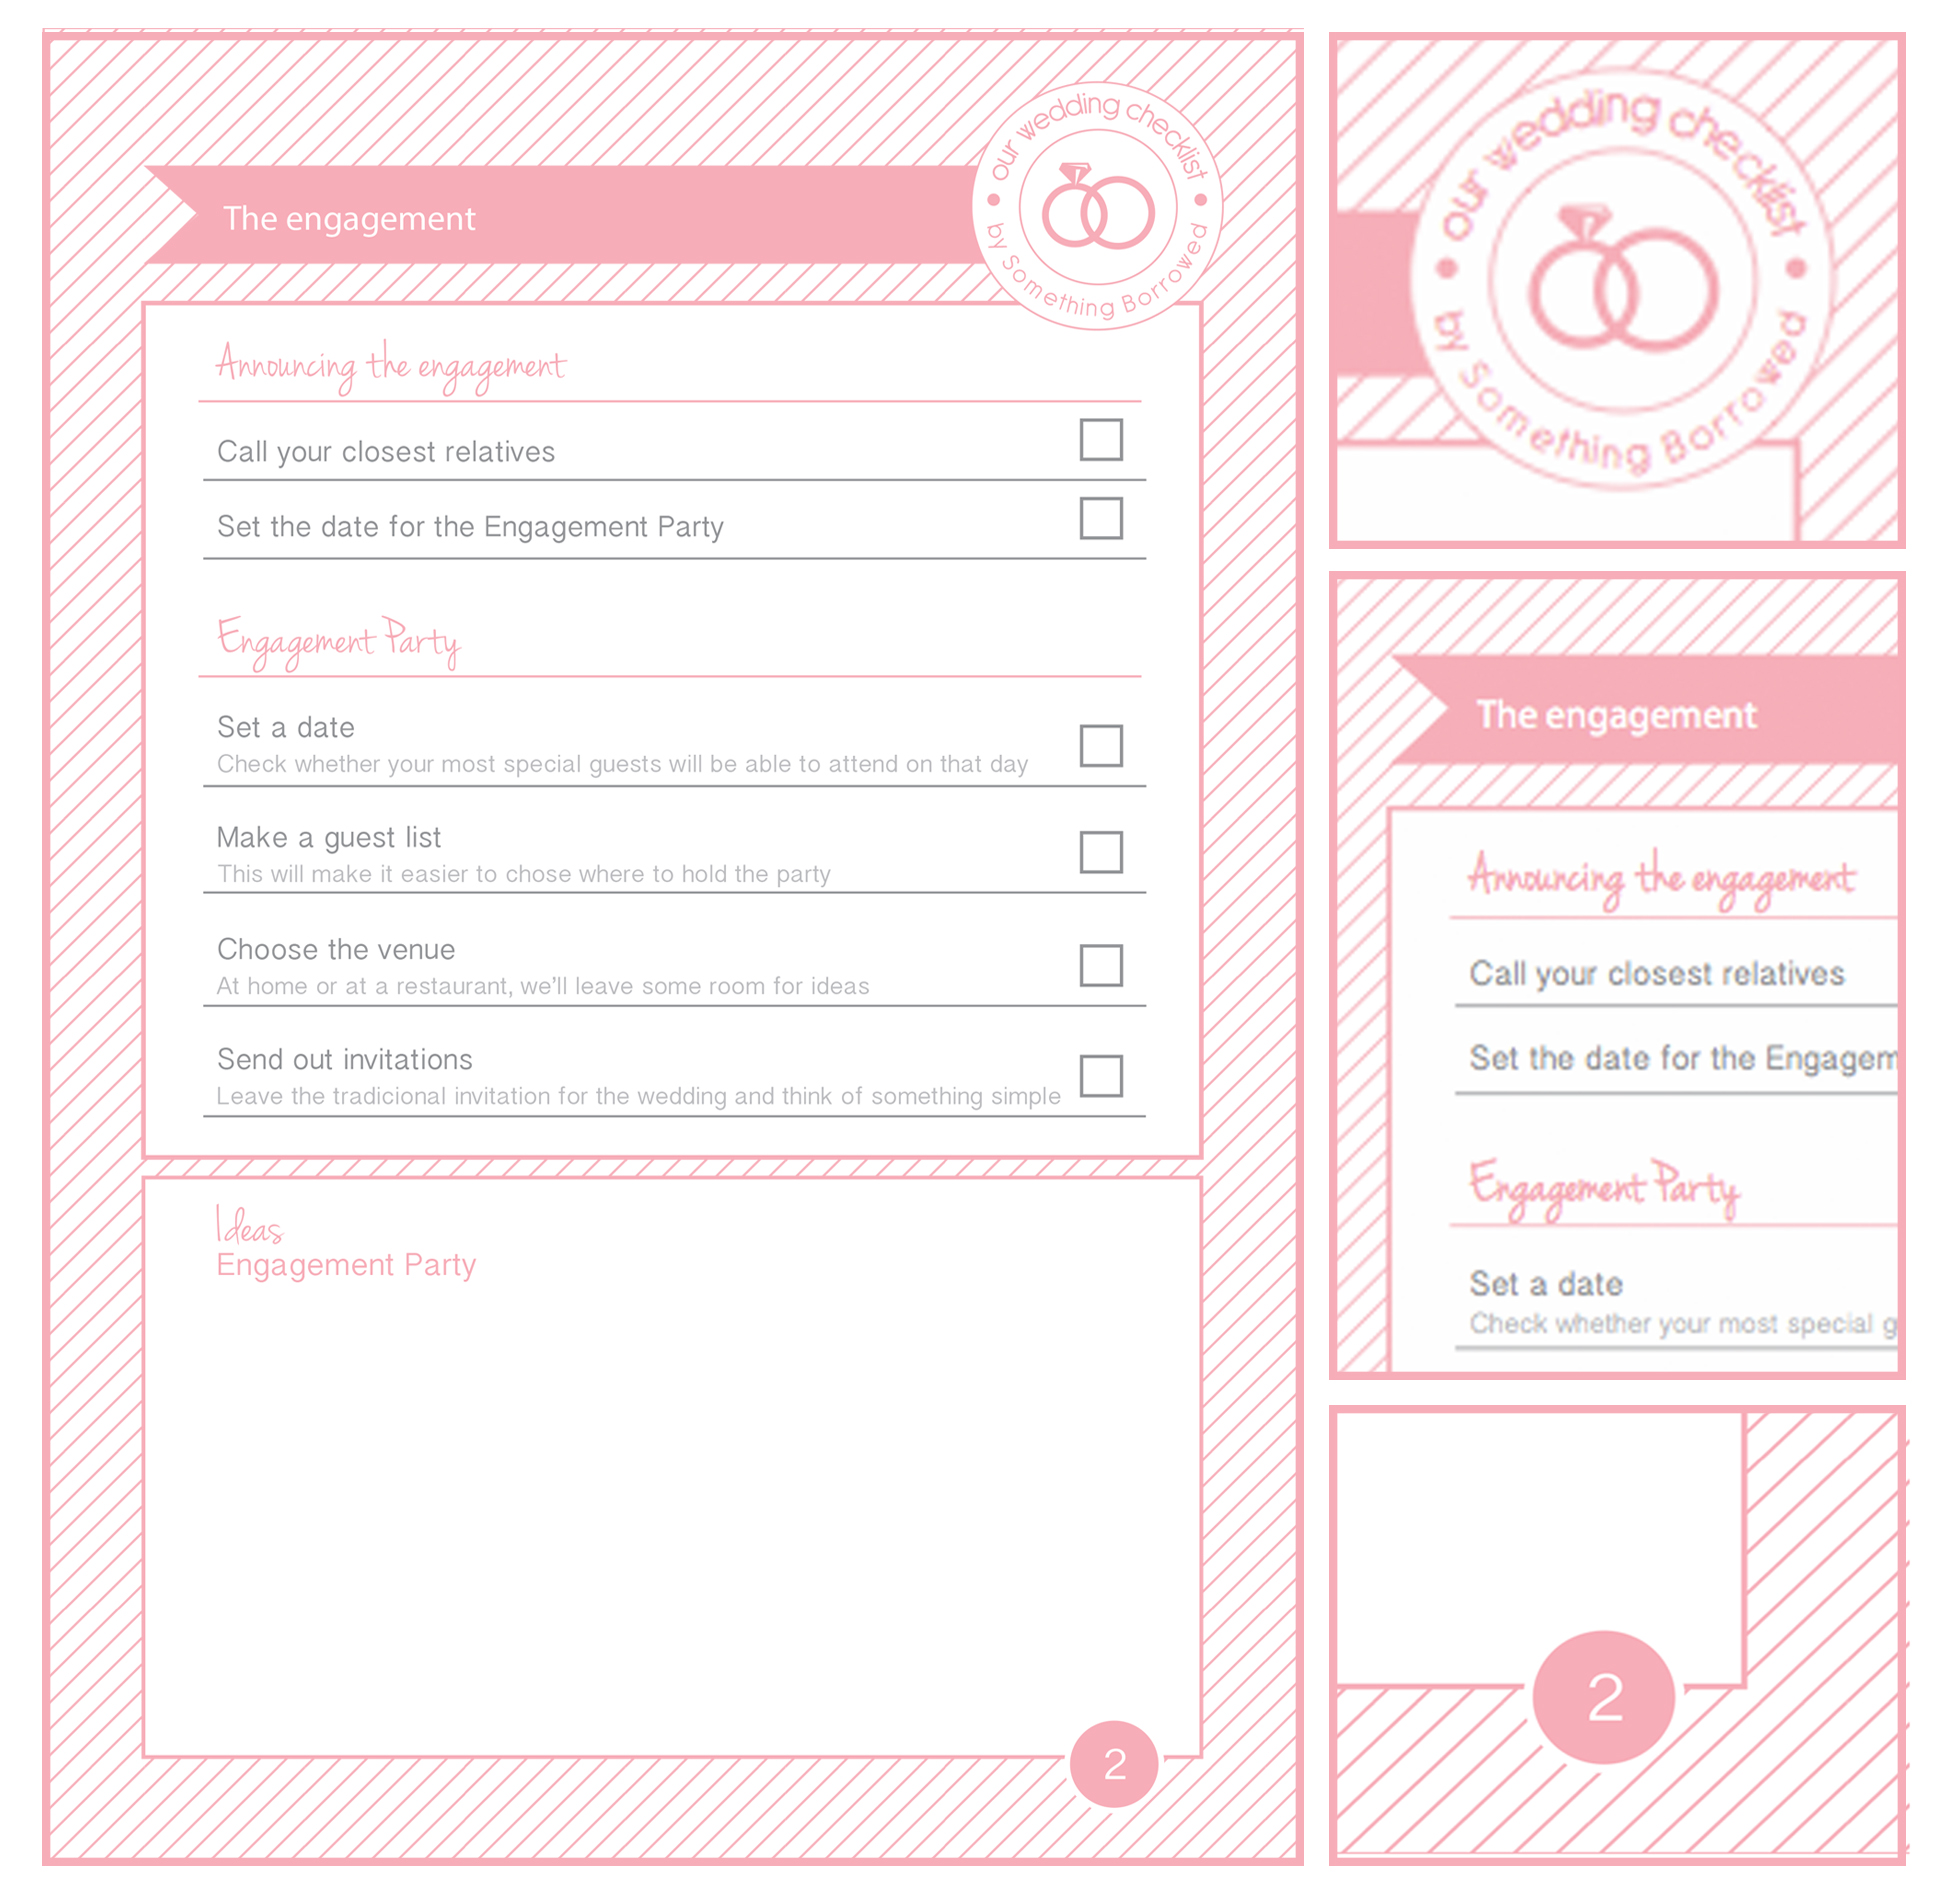 free-printable-wedding-budget-planner-and-worksheet-template-10